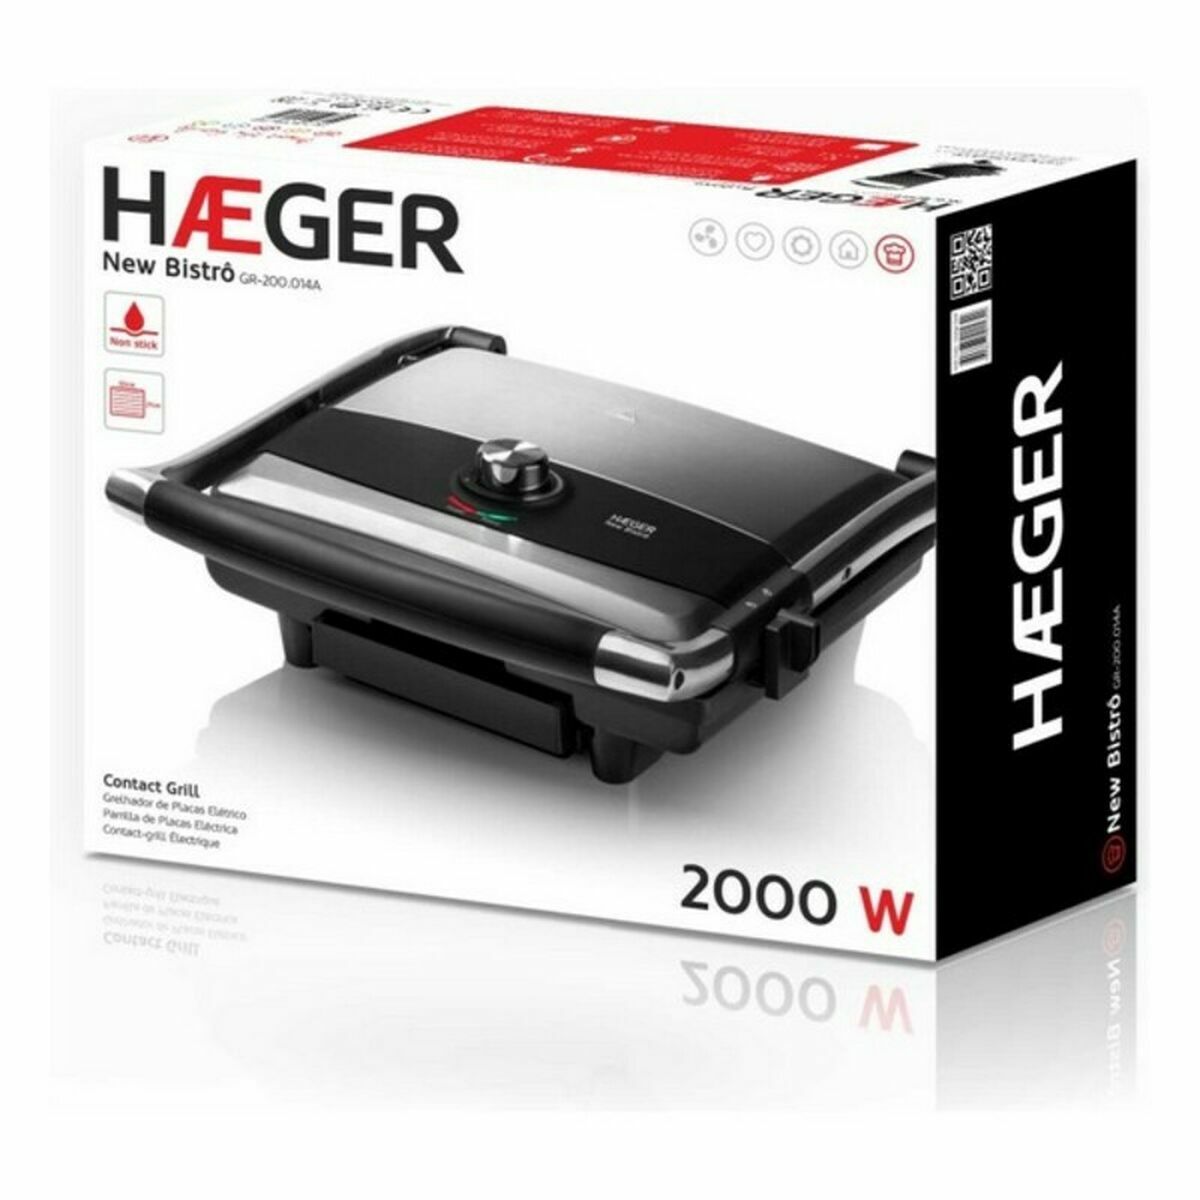 Kaufe Elektrogrill Haeger GR-200.014A 2000 W bei AWK Flagship um € 73.00